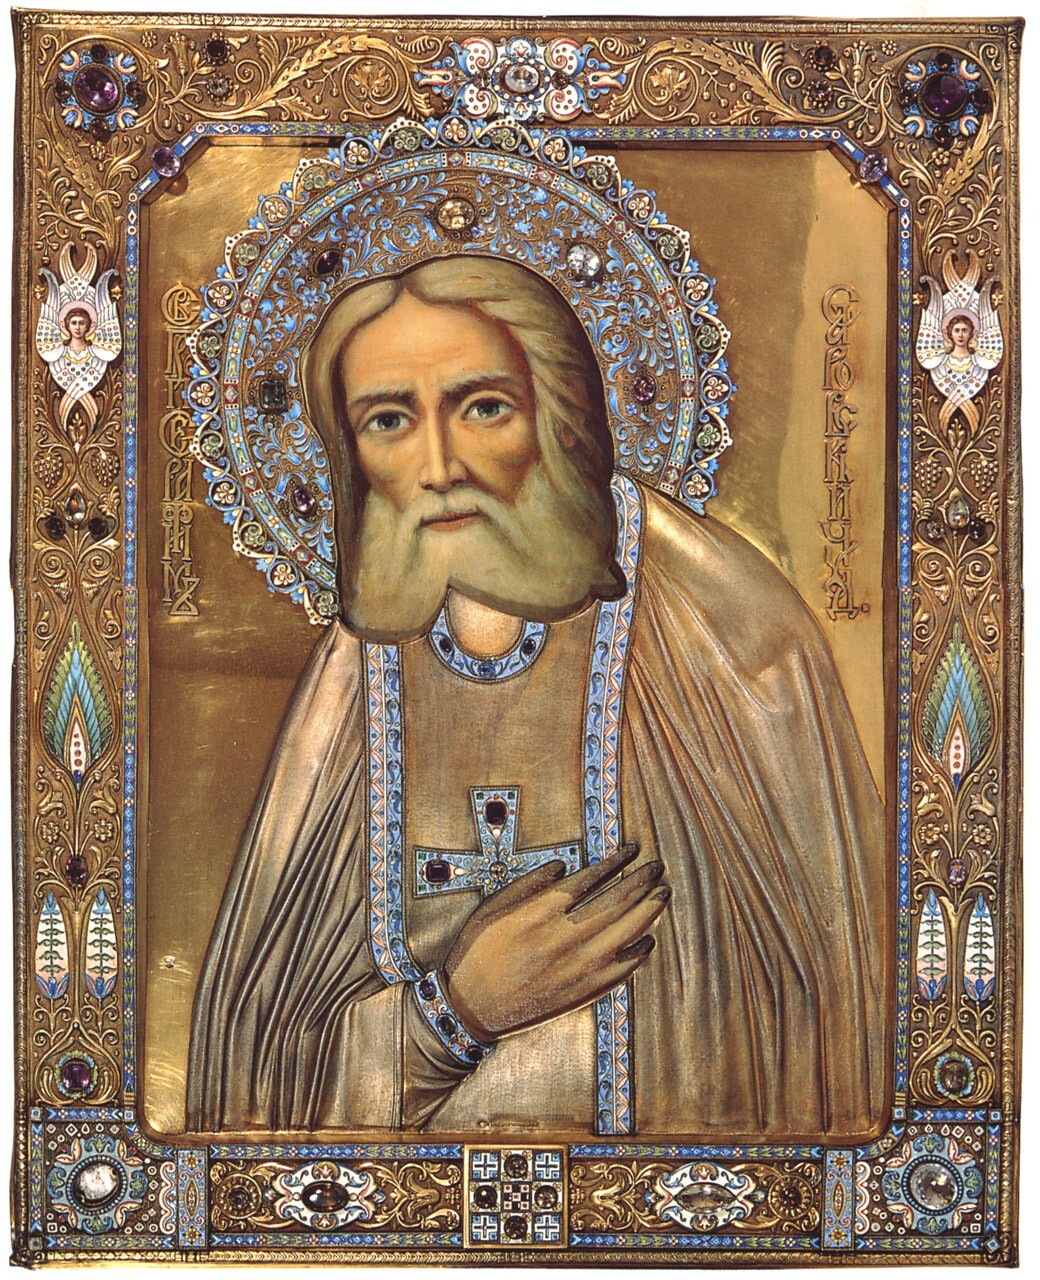 Covering of the Icon “Saint Seraphim of Sarov”